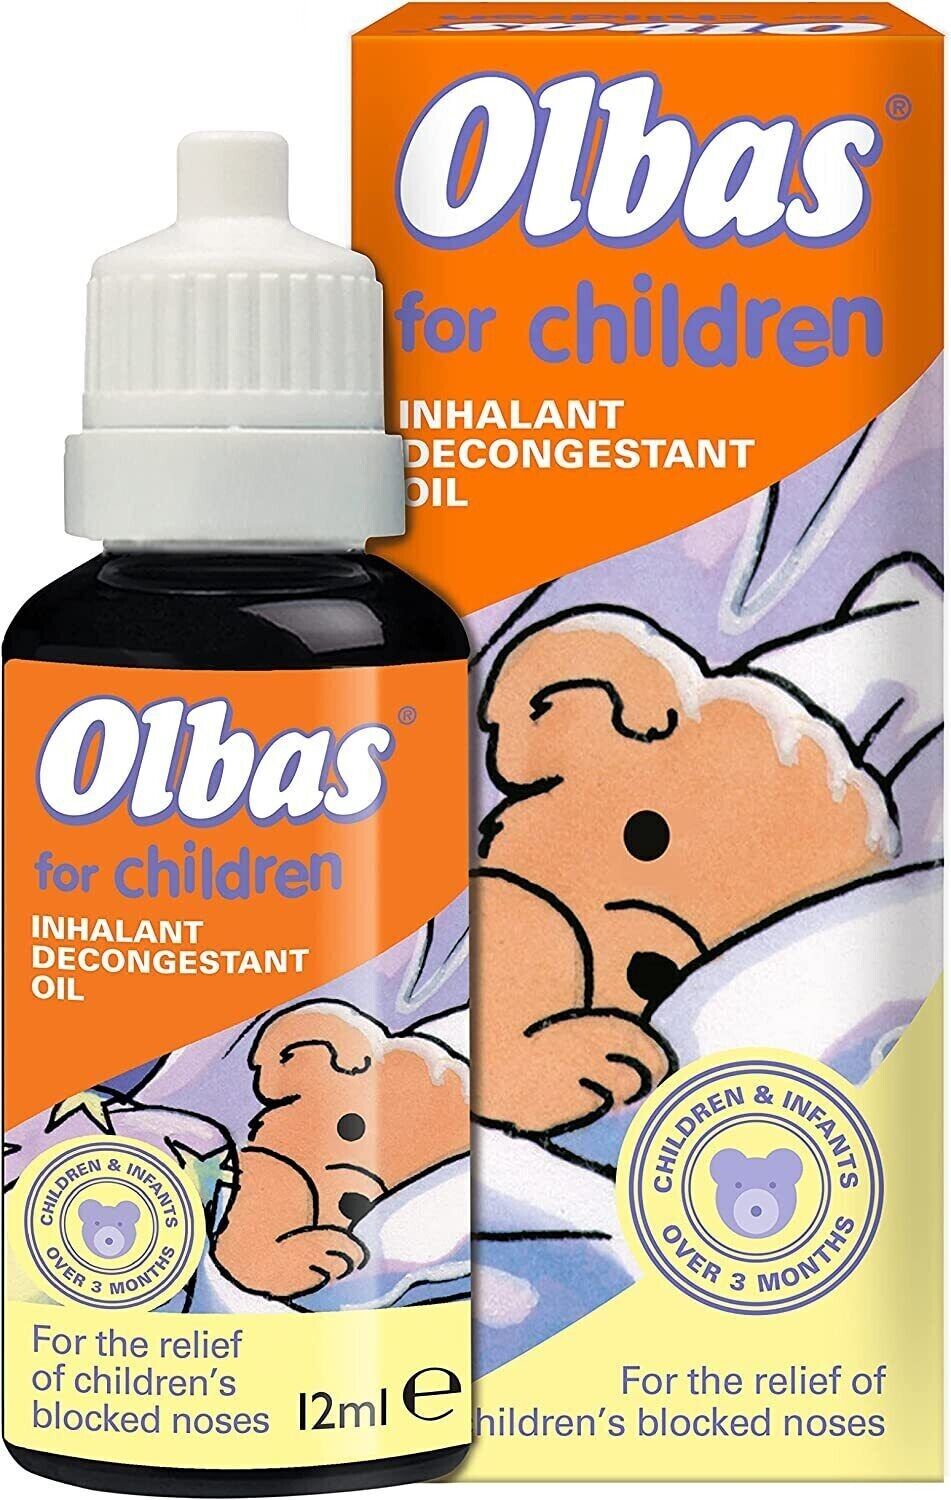 Olbas Oil For Children 12ml - Inhalant Decongestant Oil - Relief from Catarrh,